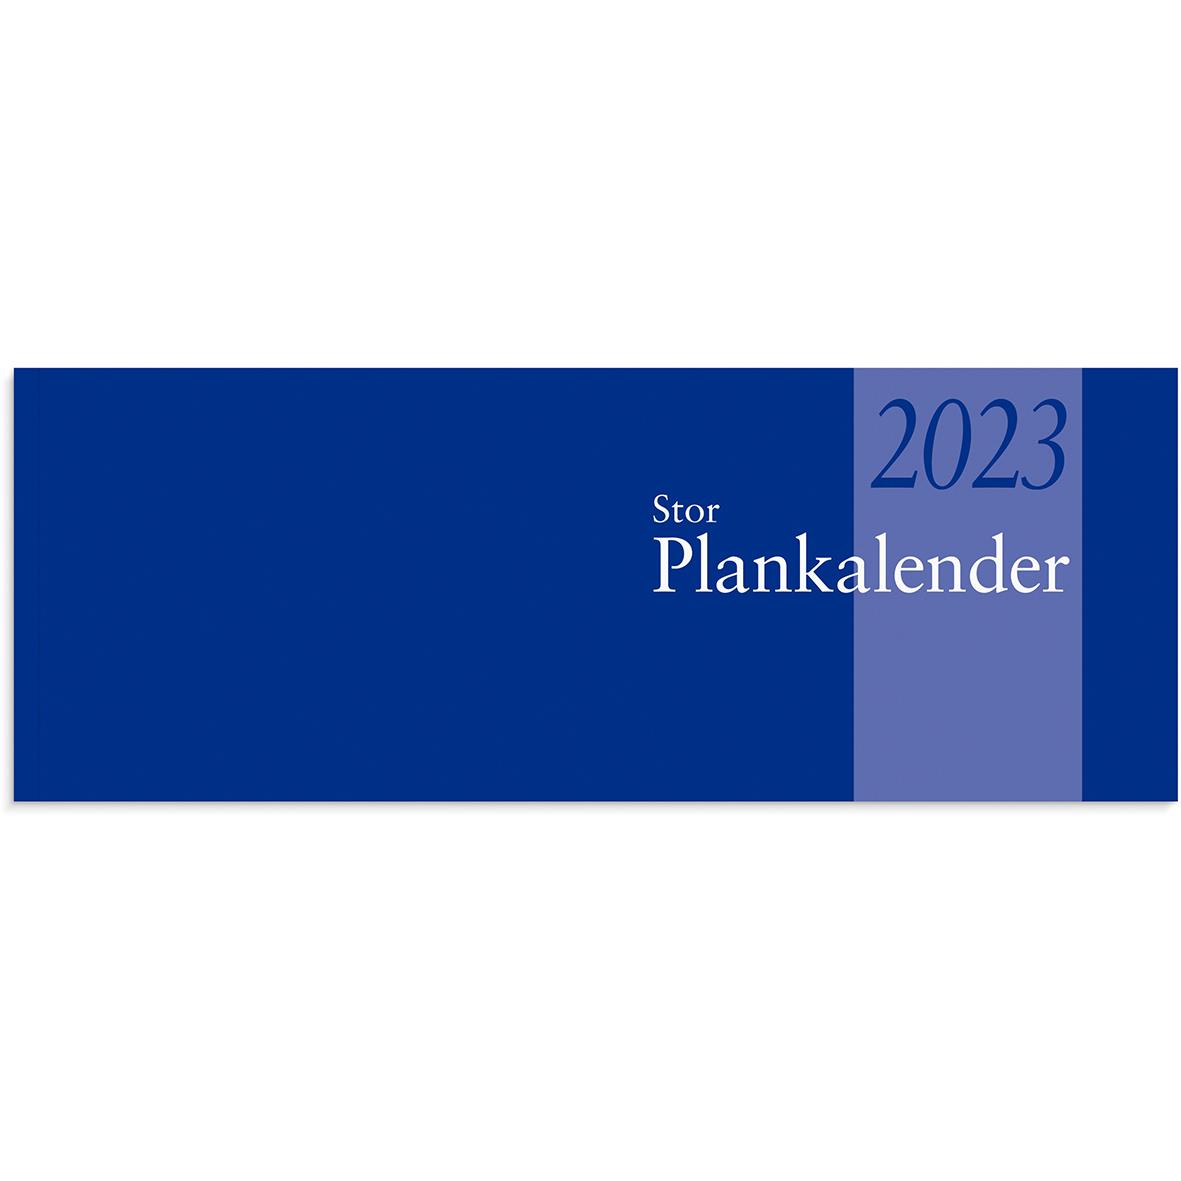 Almanacka Burde 1350 Stor Plankalender Limbunden 2023 16030169_1